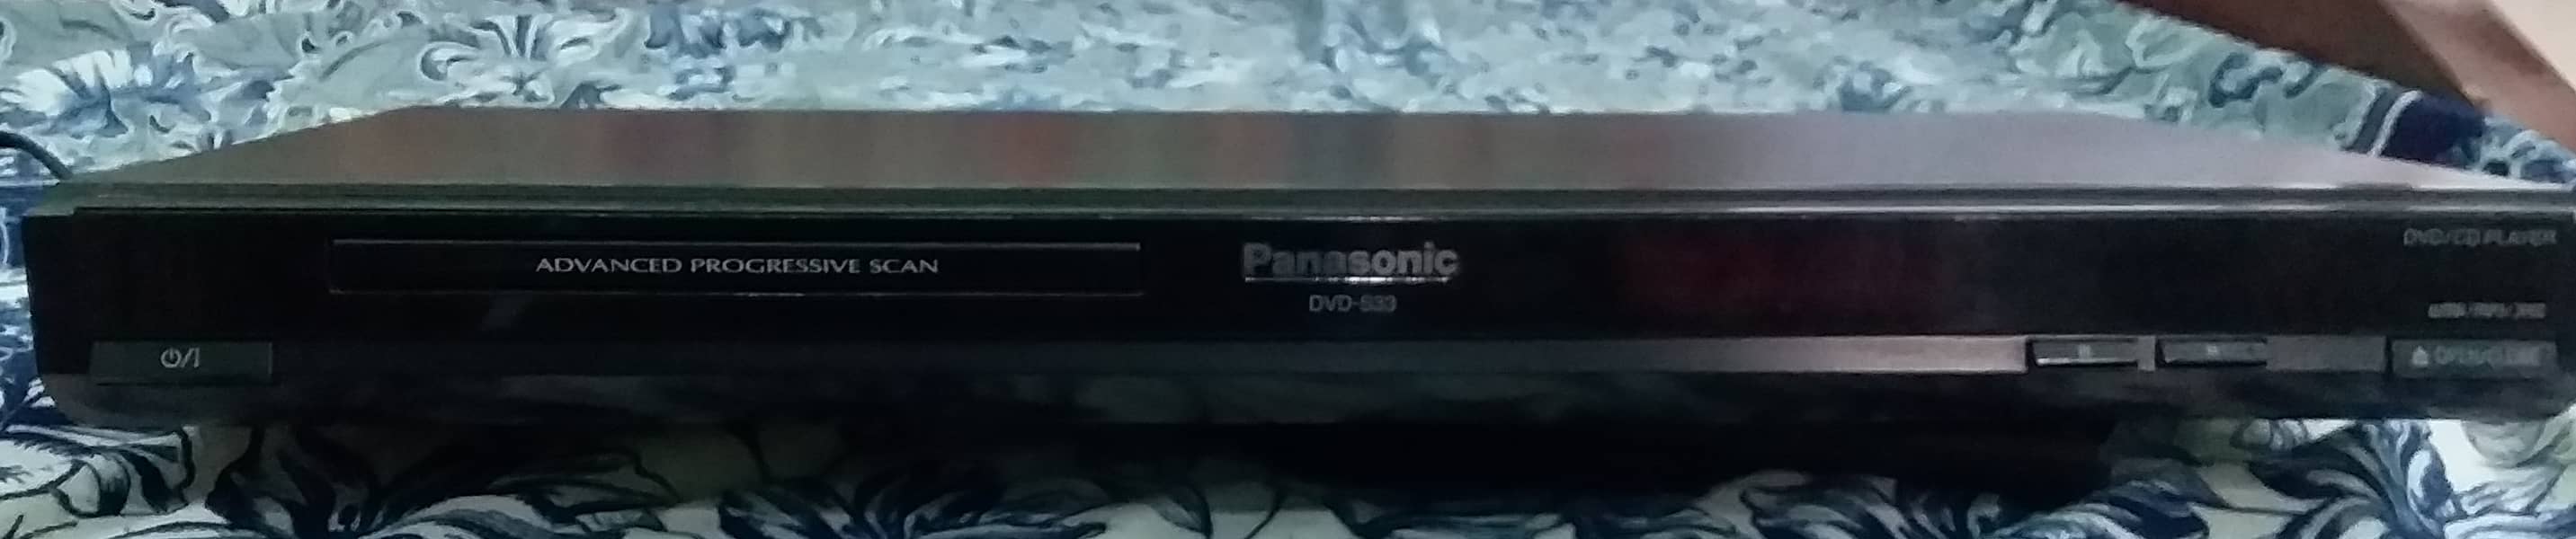 CD / DVD Player Panasonic Original 1